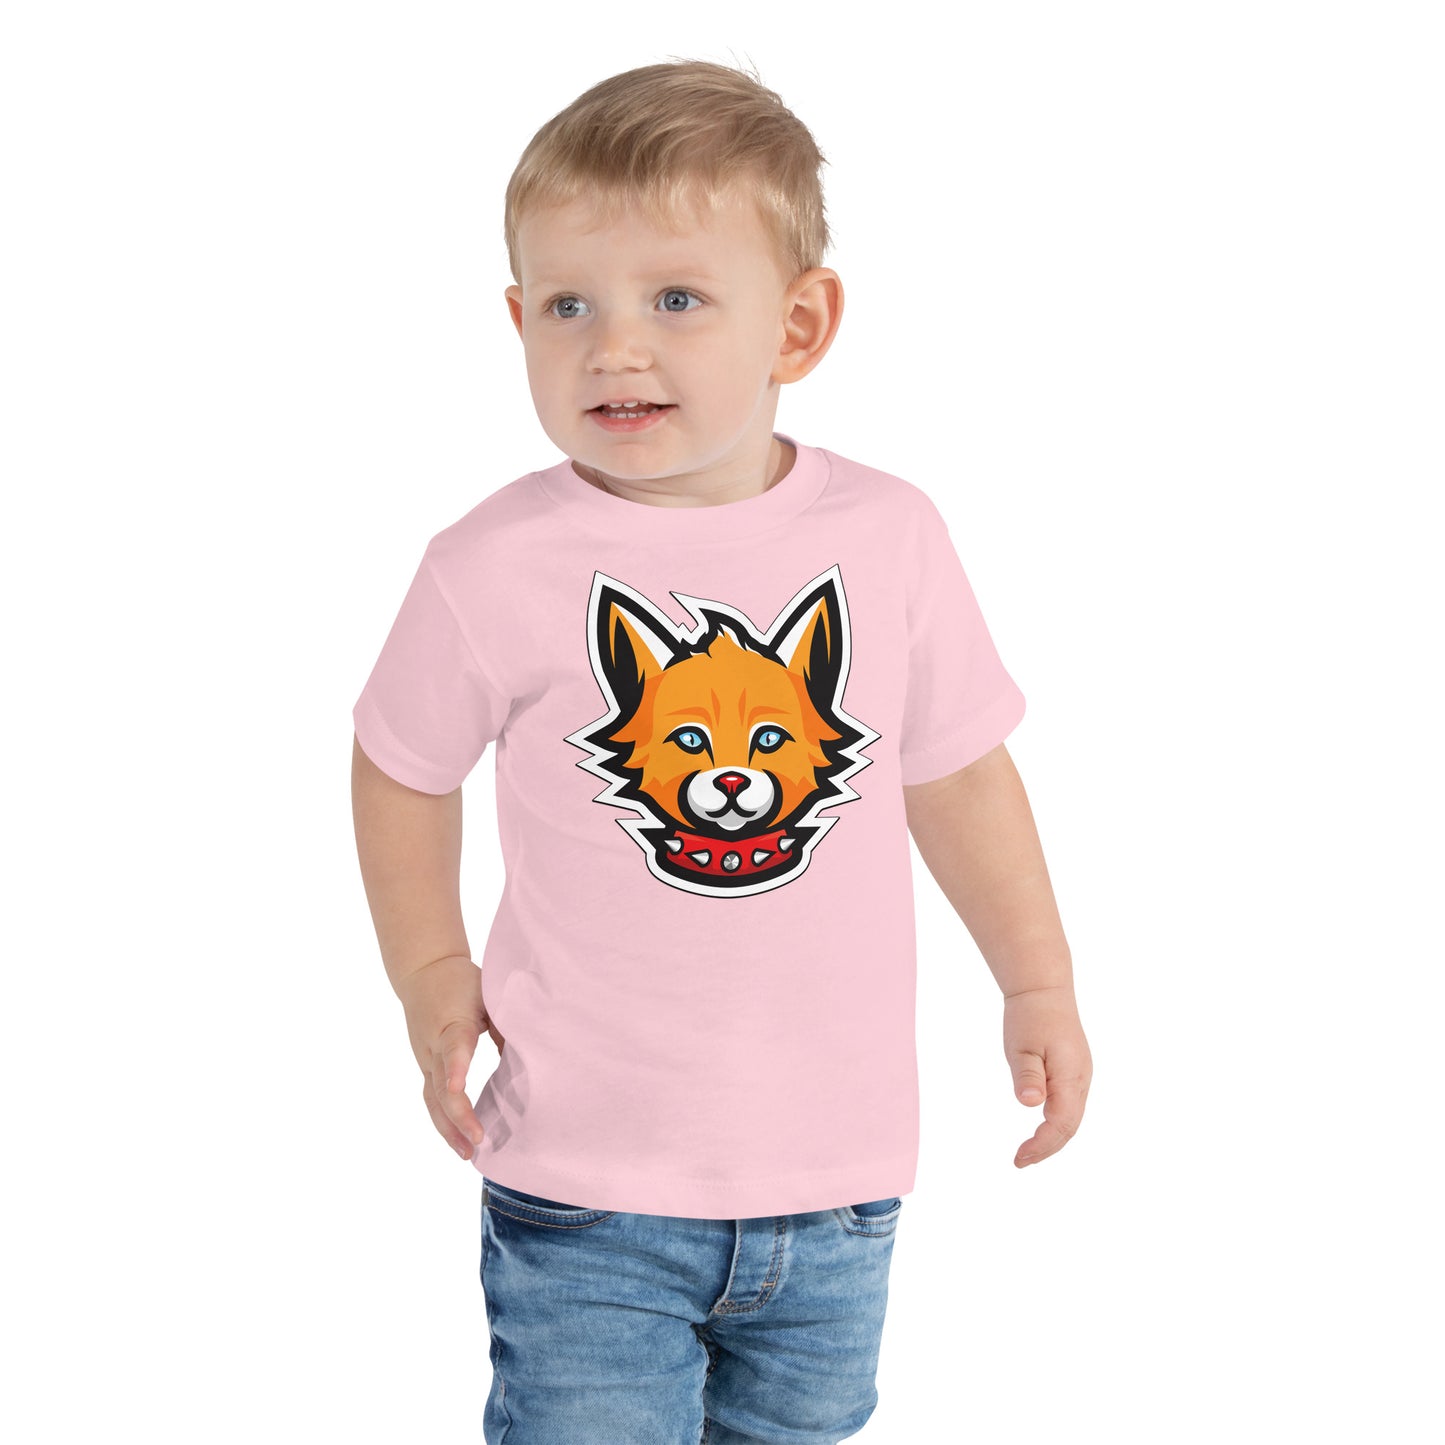 Cool Cat Face T-shirt, No. 0119